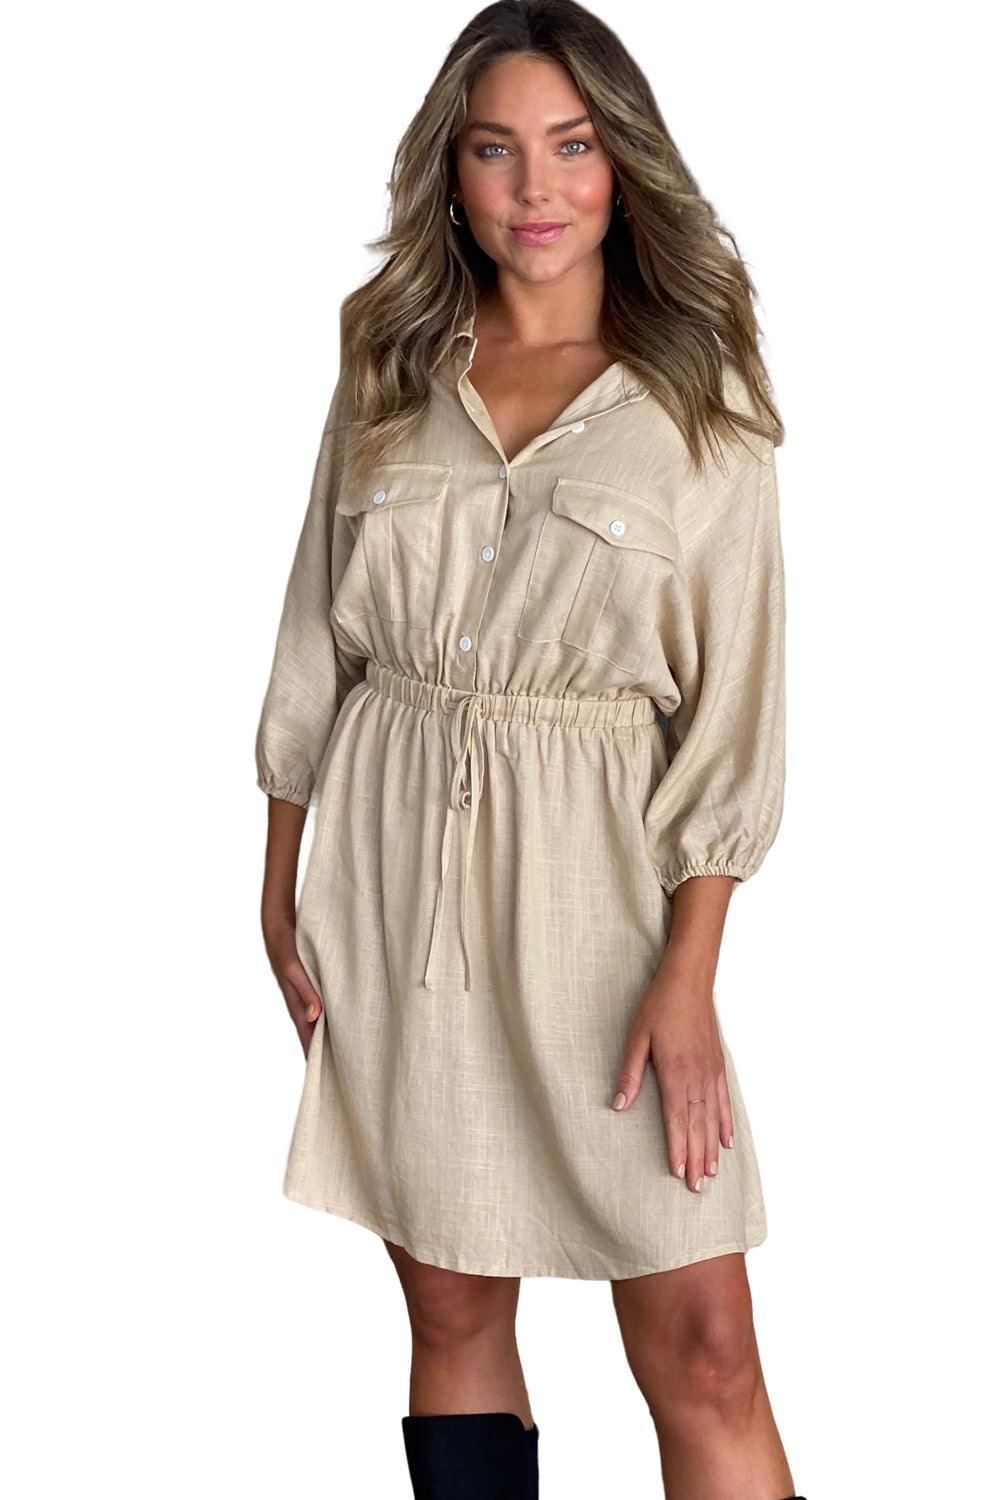 Apricot Drawstring High Waist Chest Pockets Buttoned Mini Dress - L & M Kee, LLC